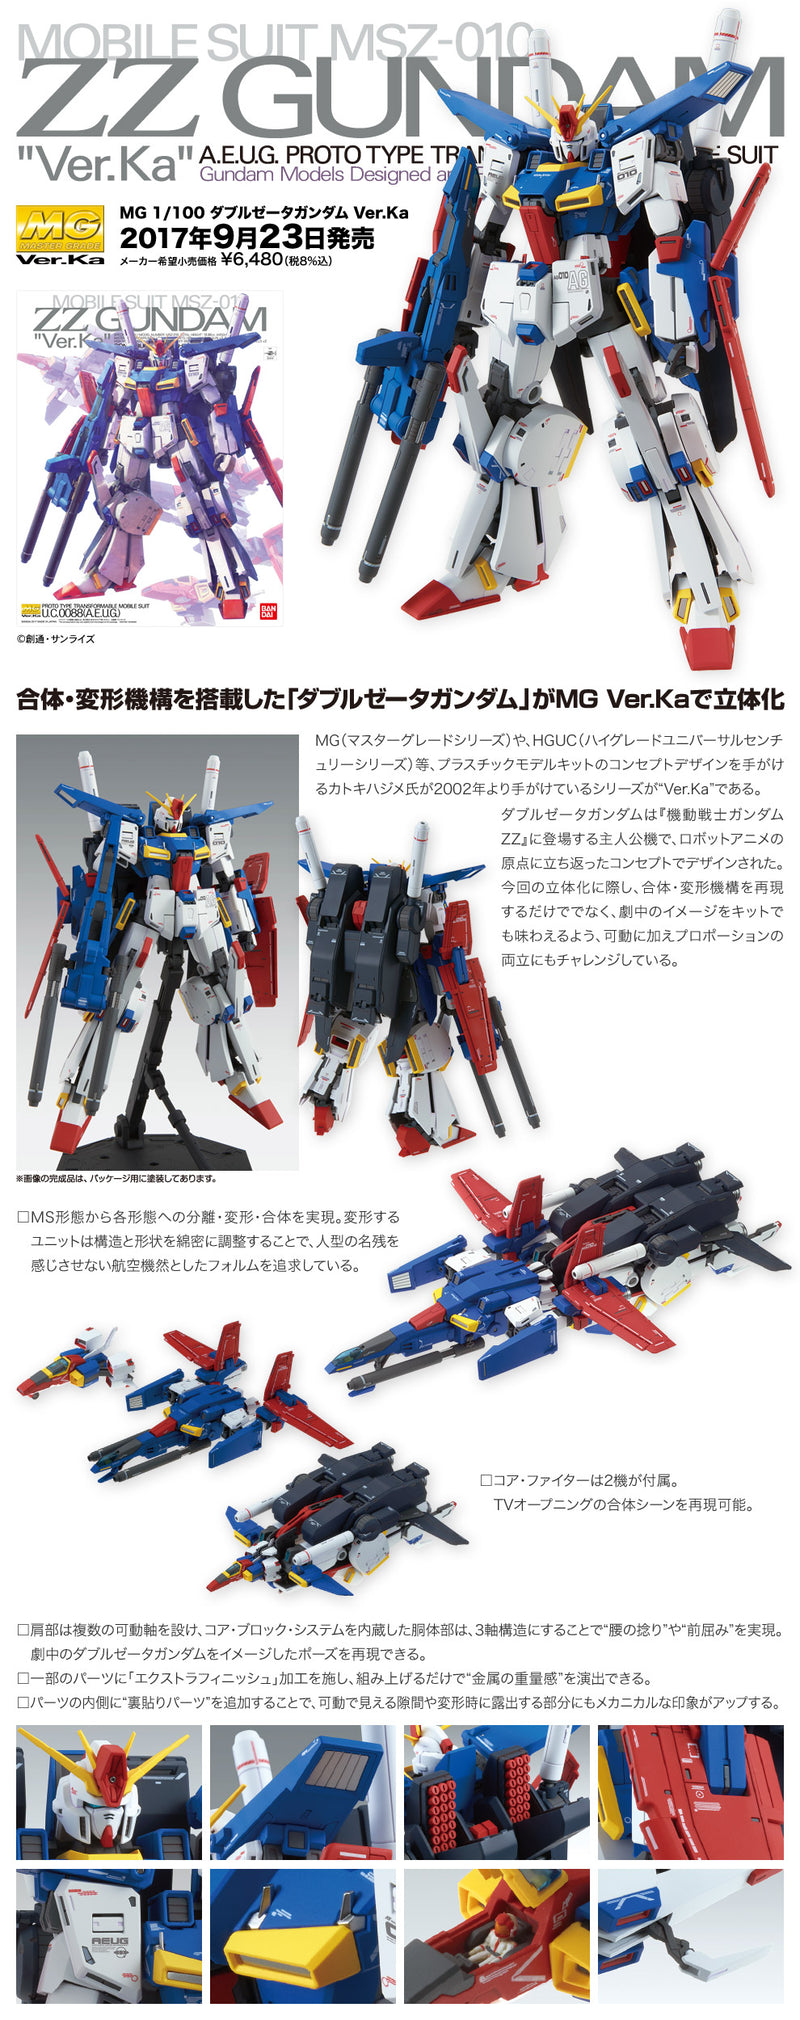 MG MSZ-010 ZZ Gundam Ver. Ka 1/100